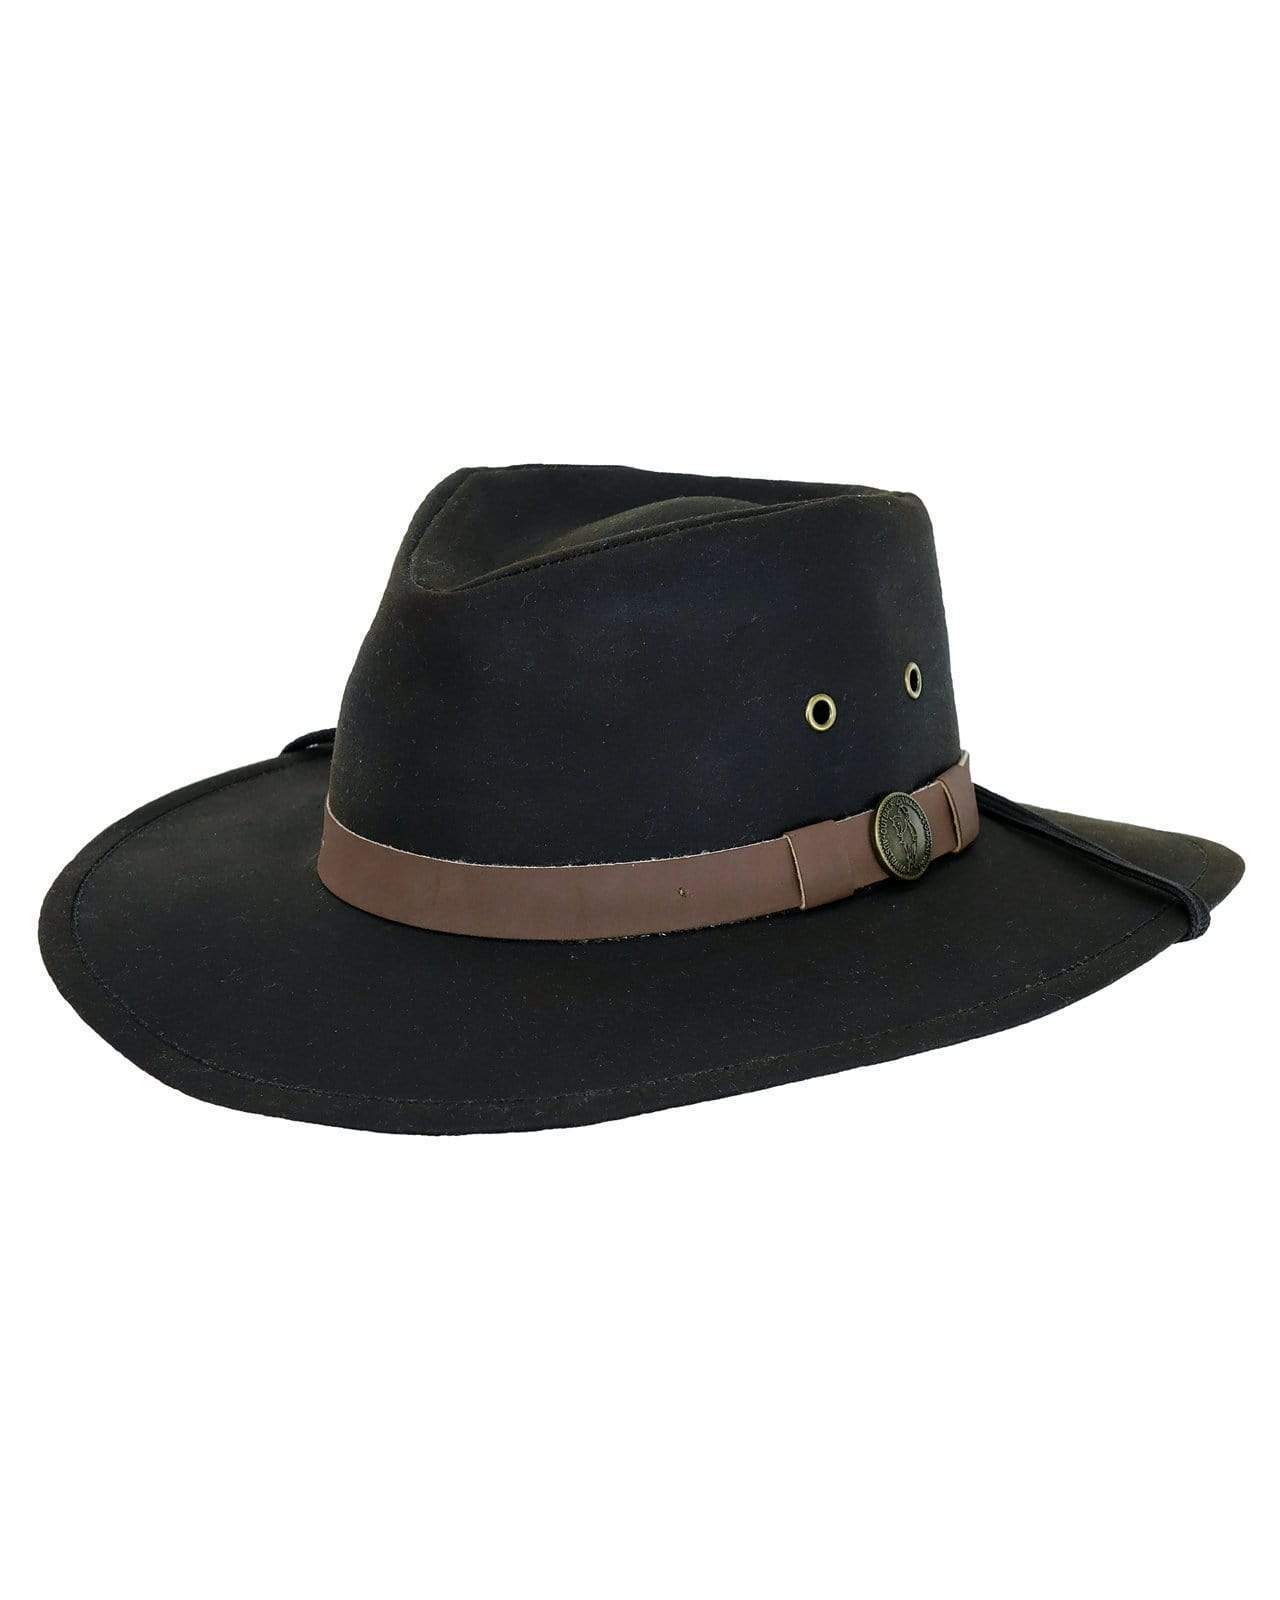 Outback Trading Company Kodiak Brown / S 1480-BRN-SM 789043014914 Hats